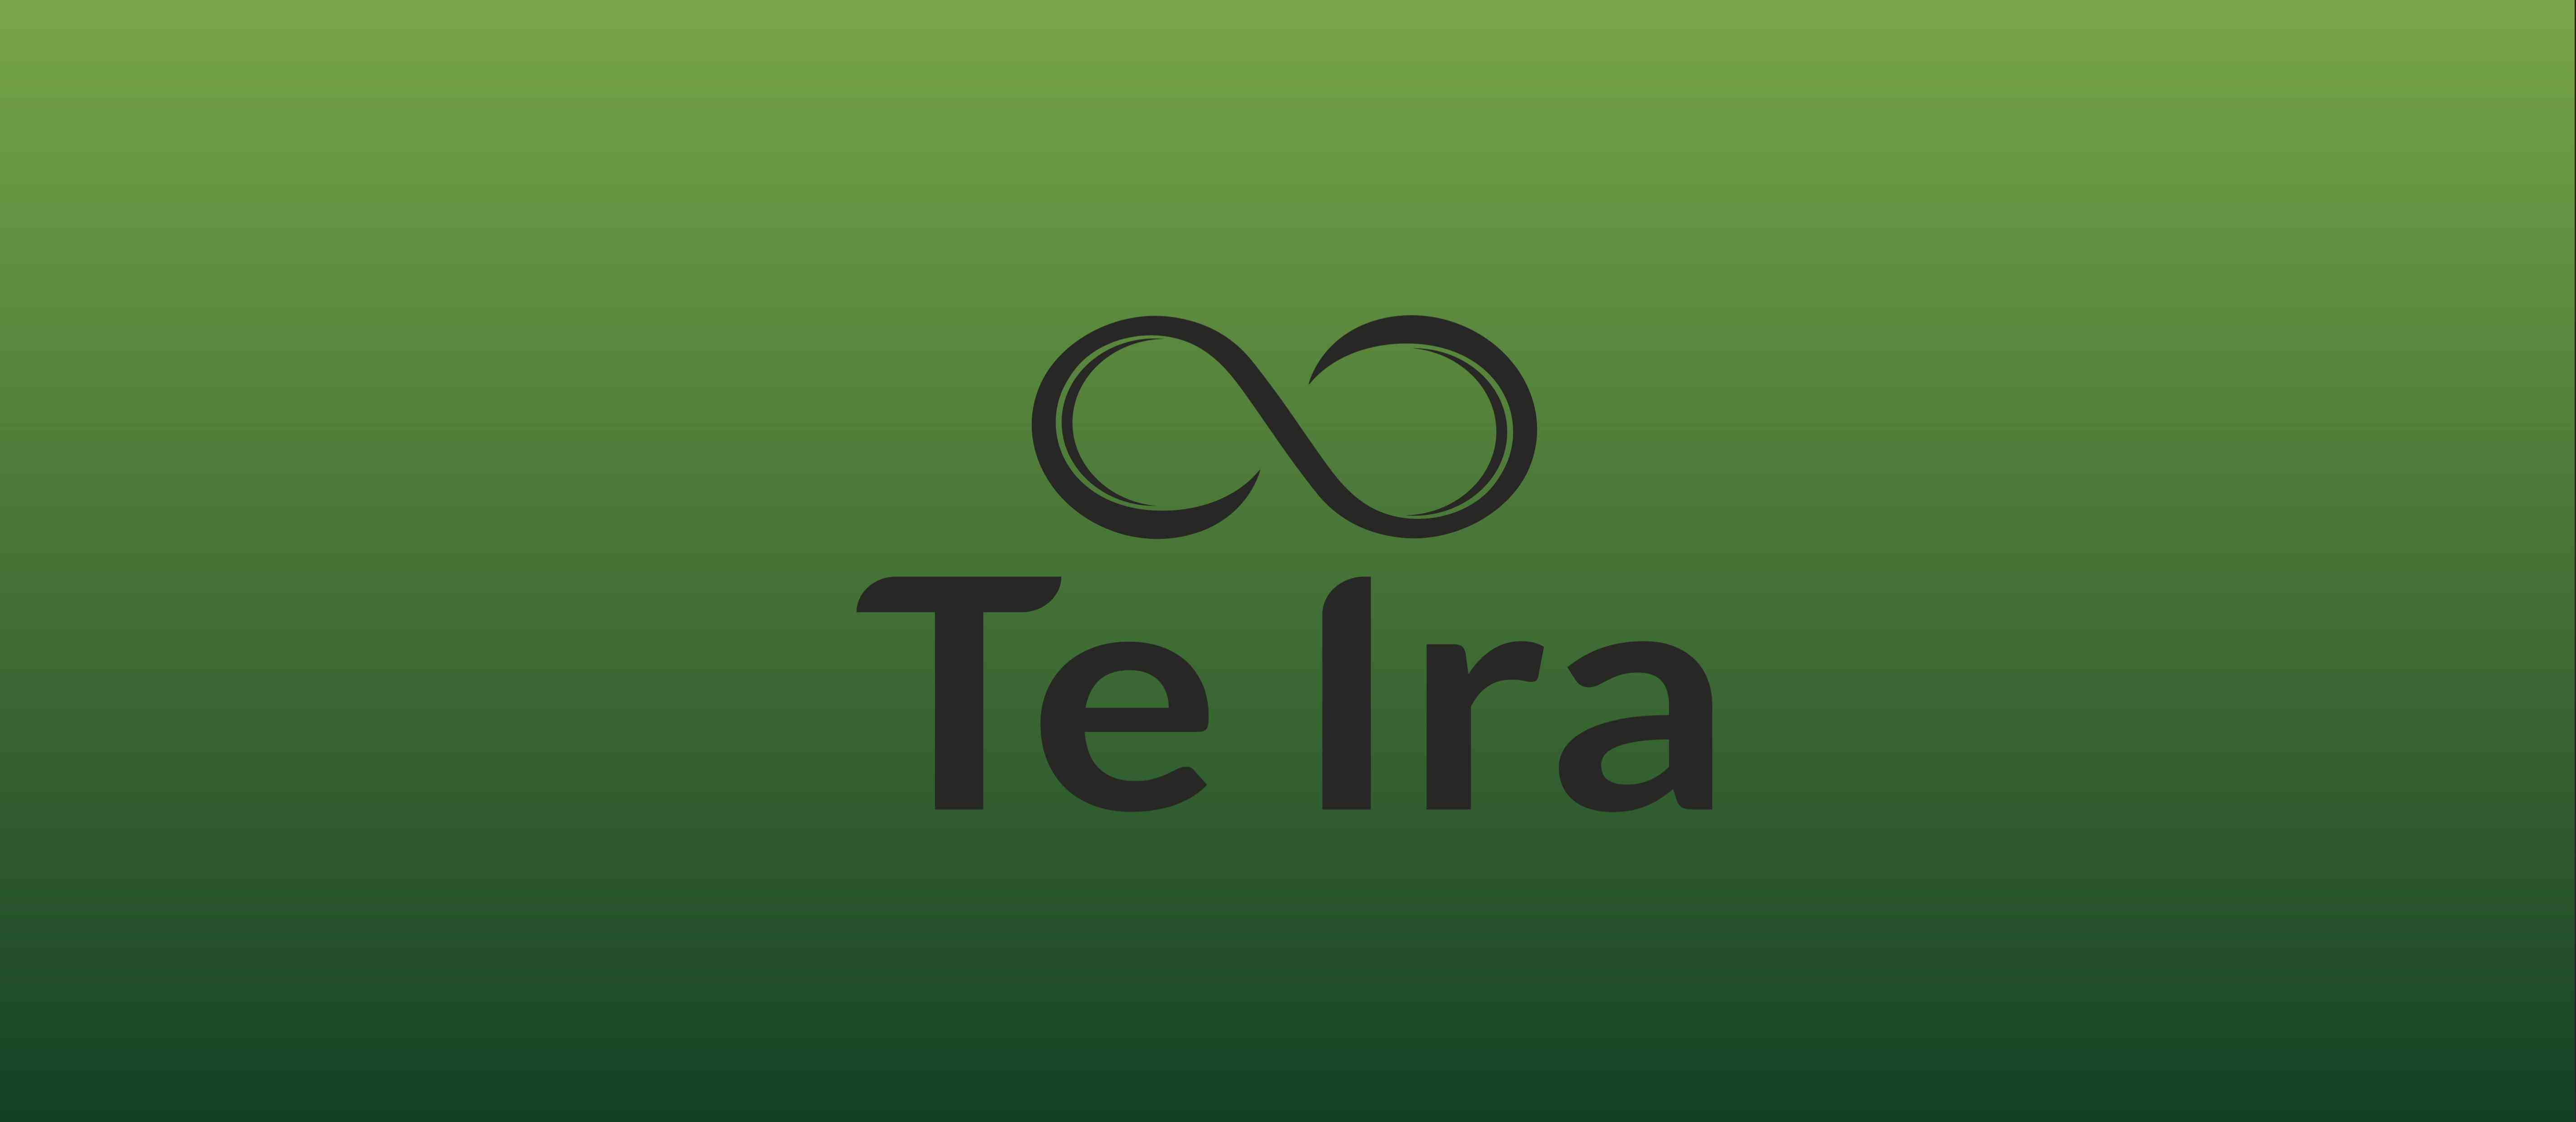 Te Ira project image